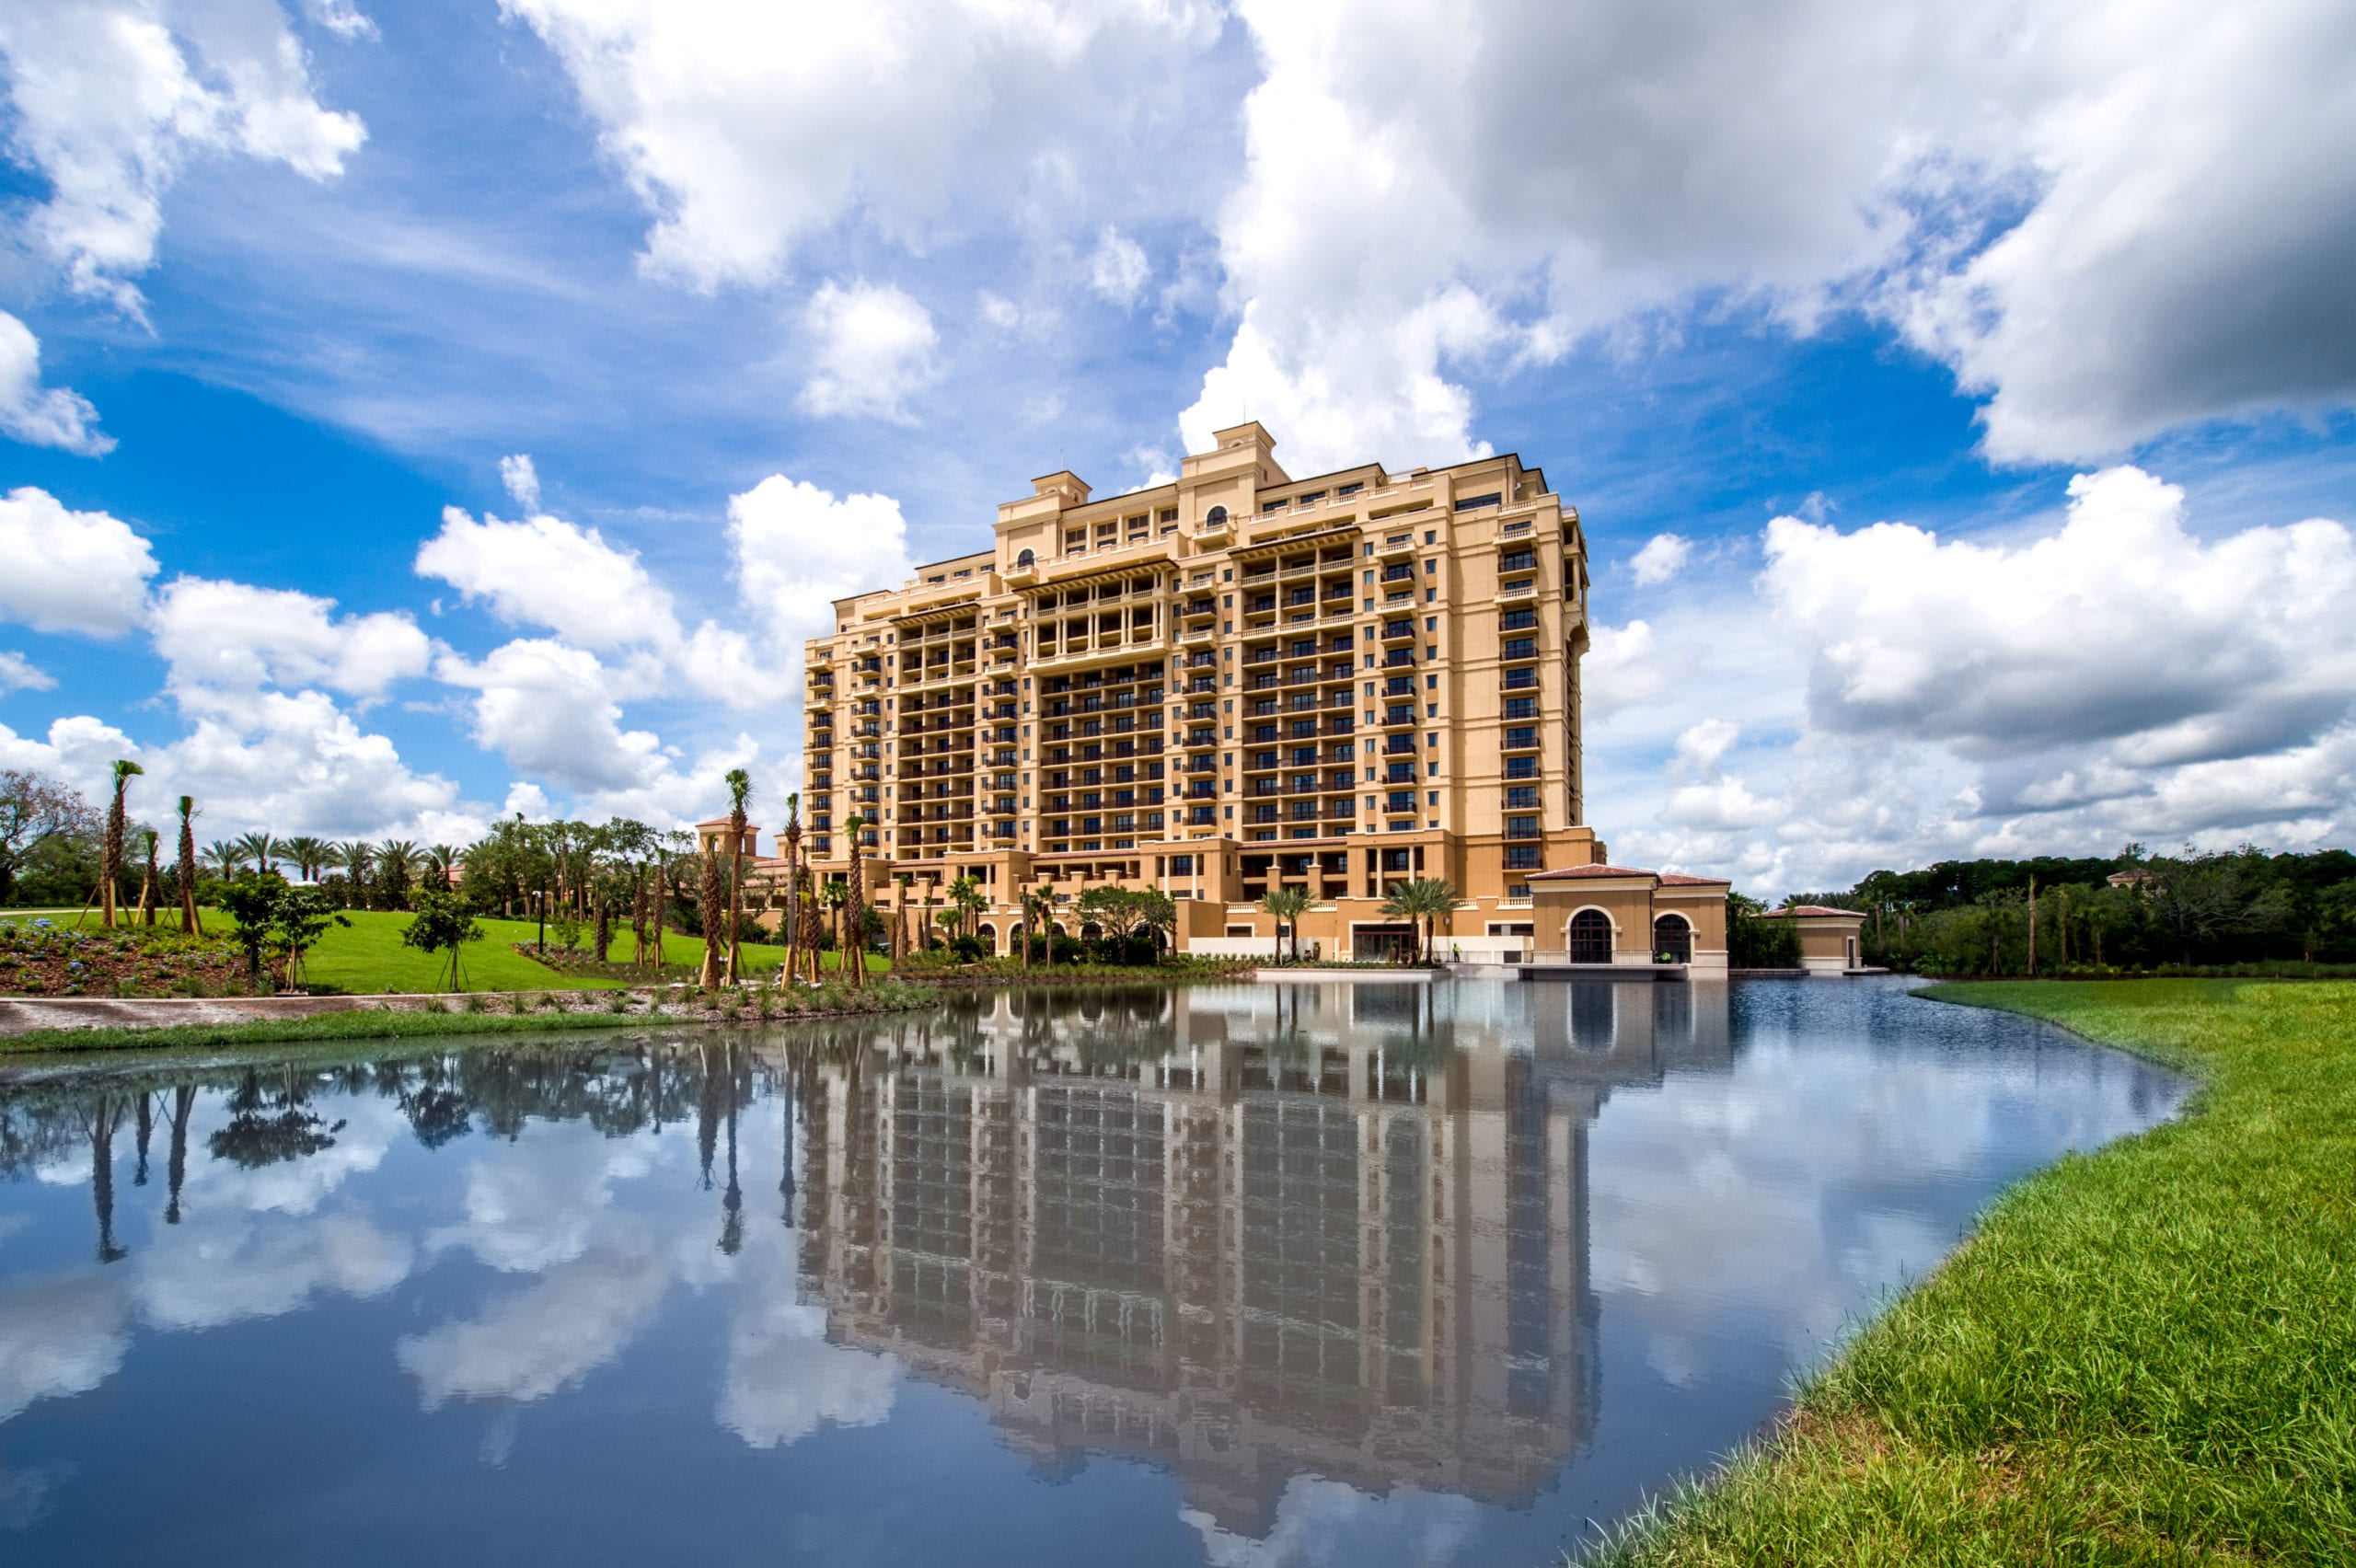 IU C&I Studios Portfolio Four Seasons Building by pond under blue cloudy skies with palm trees